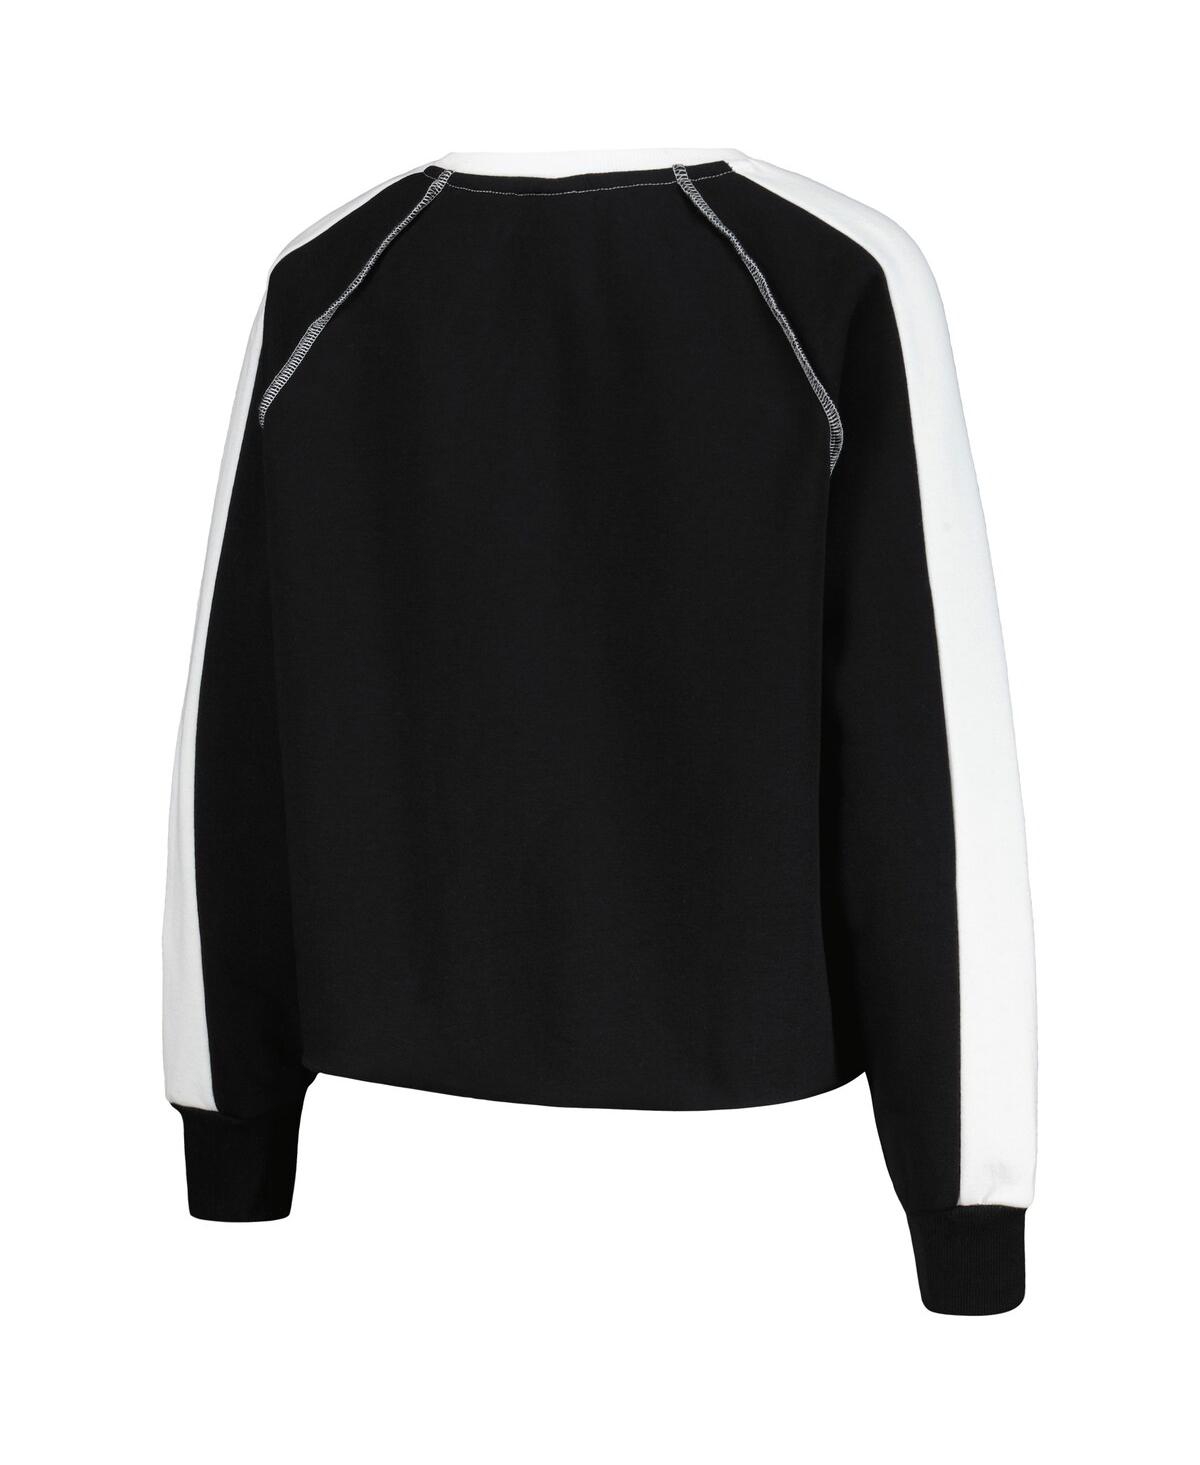 Shop Gameday Couture Women's  Black Usc Trojans Blindside Raglanâ Cropped Pullover Sweatshirt